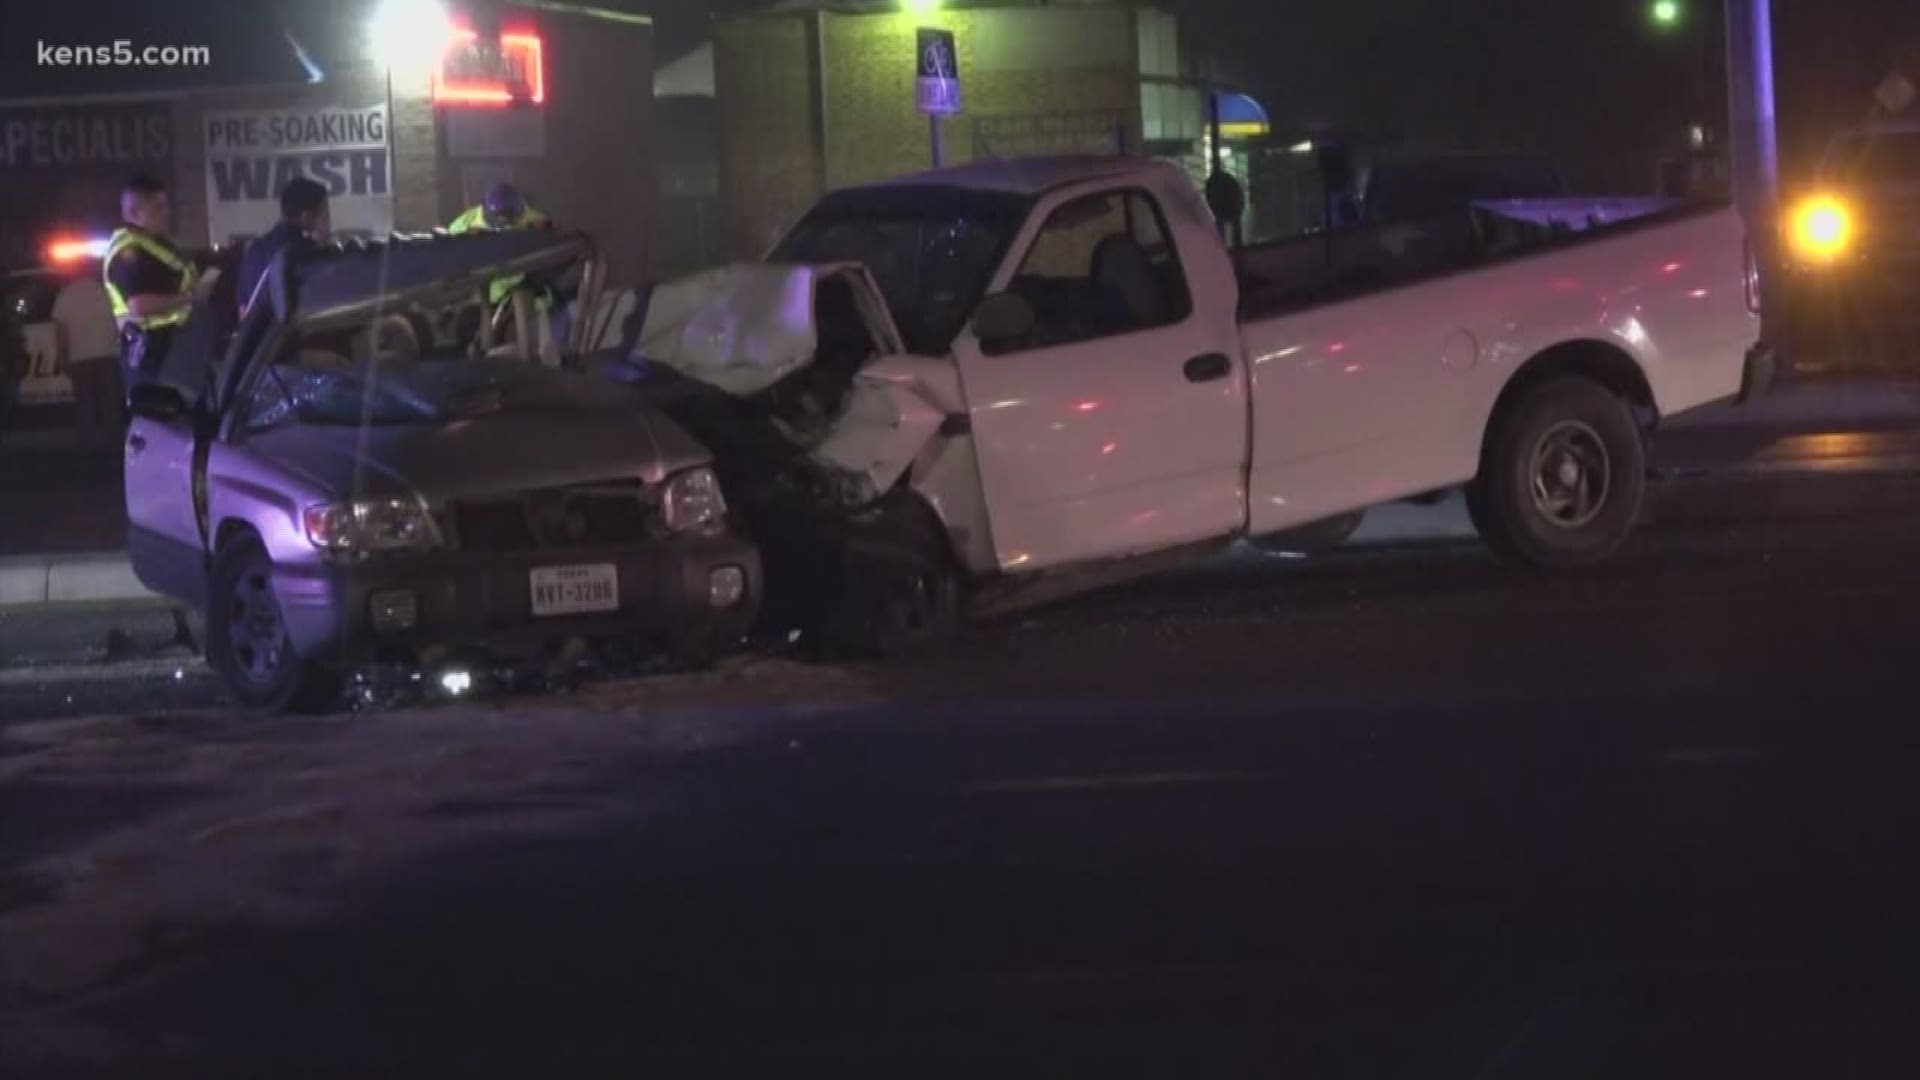 Trinity woman hears loud boom, driver slammed into her two cars